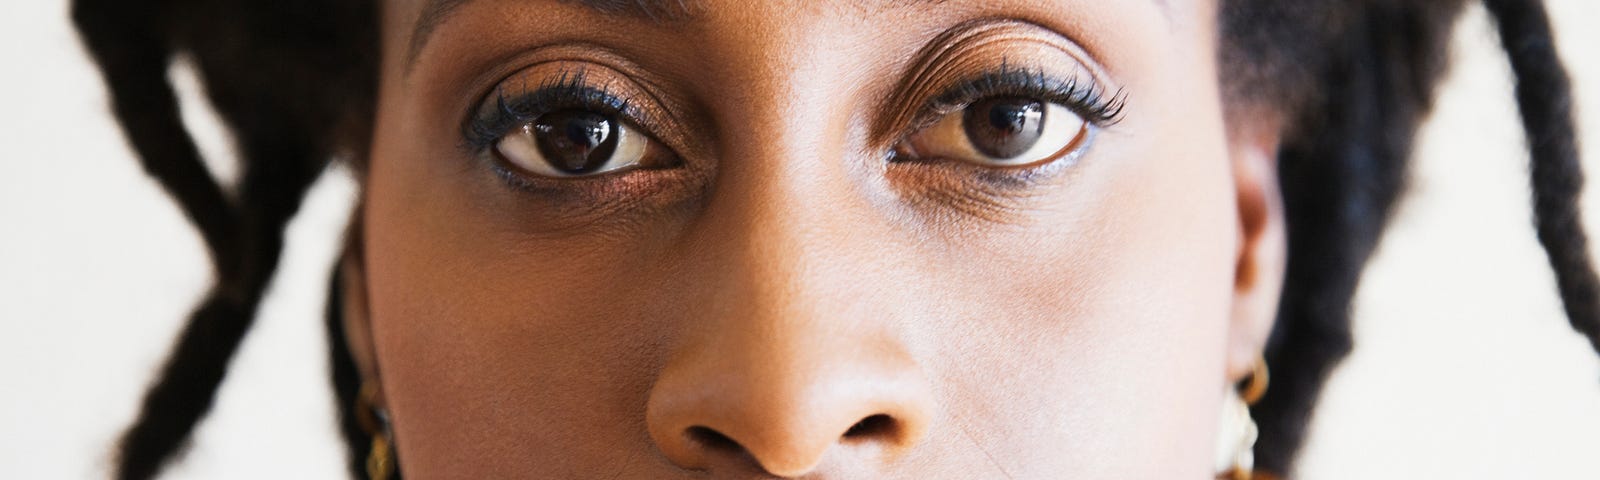 Closeup photo of a Black woman’s face.